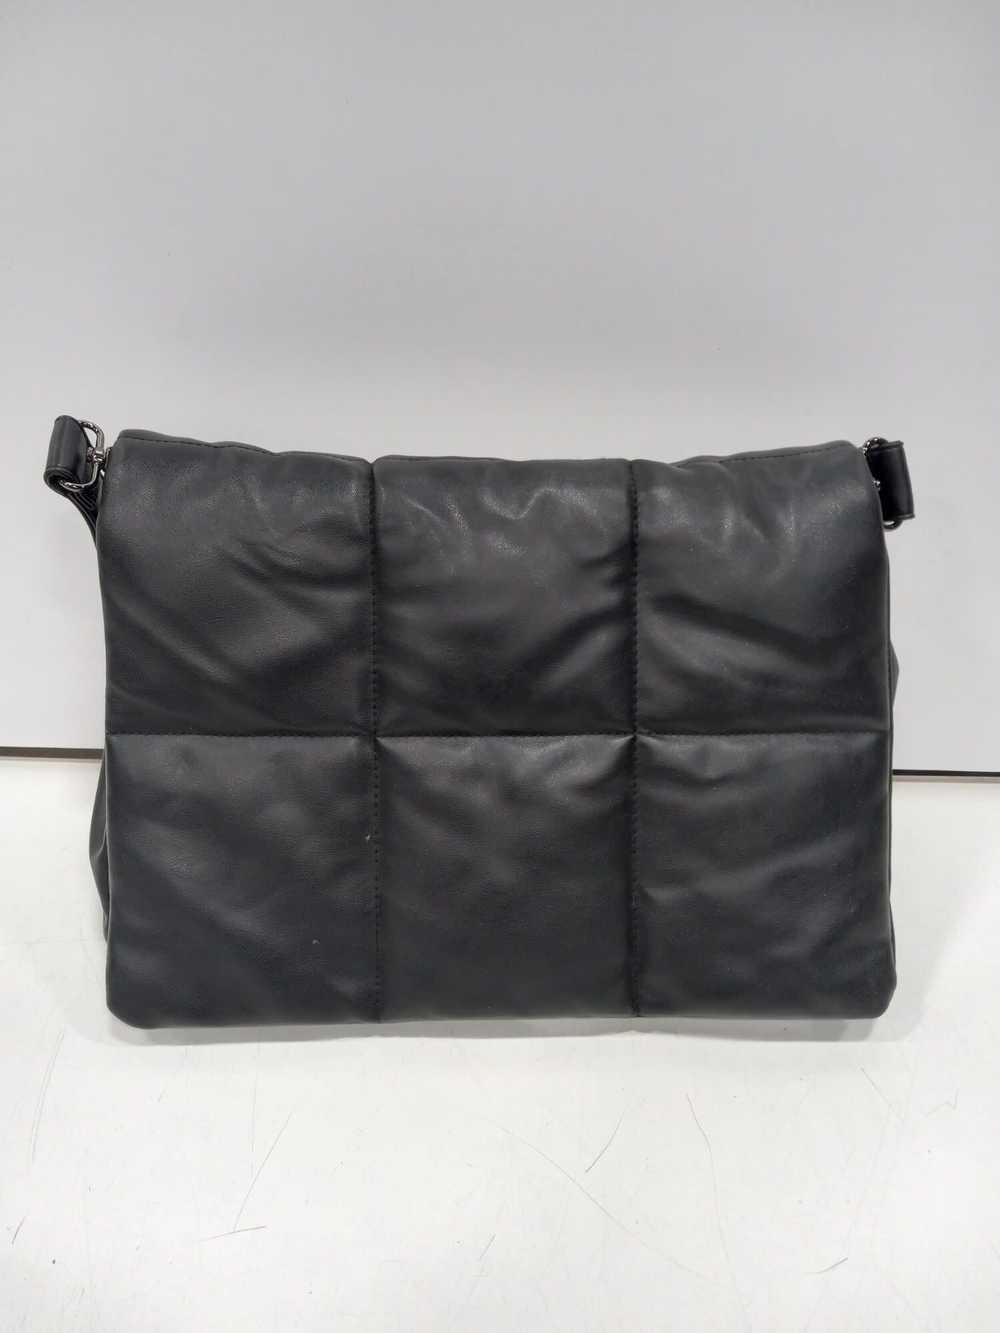 Sondra Roberts Women's Black Leather Purse - image 1